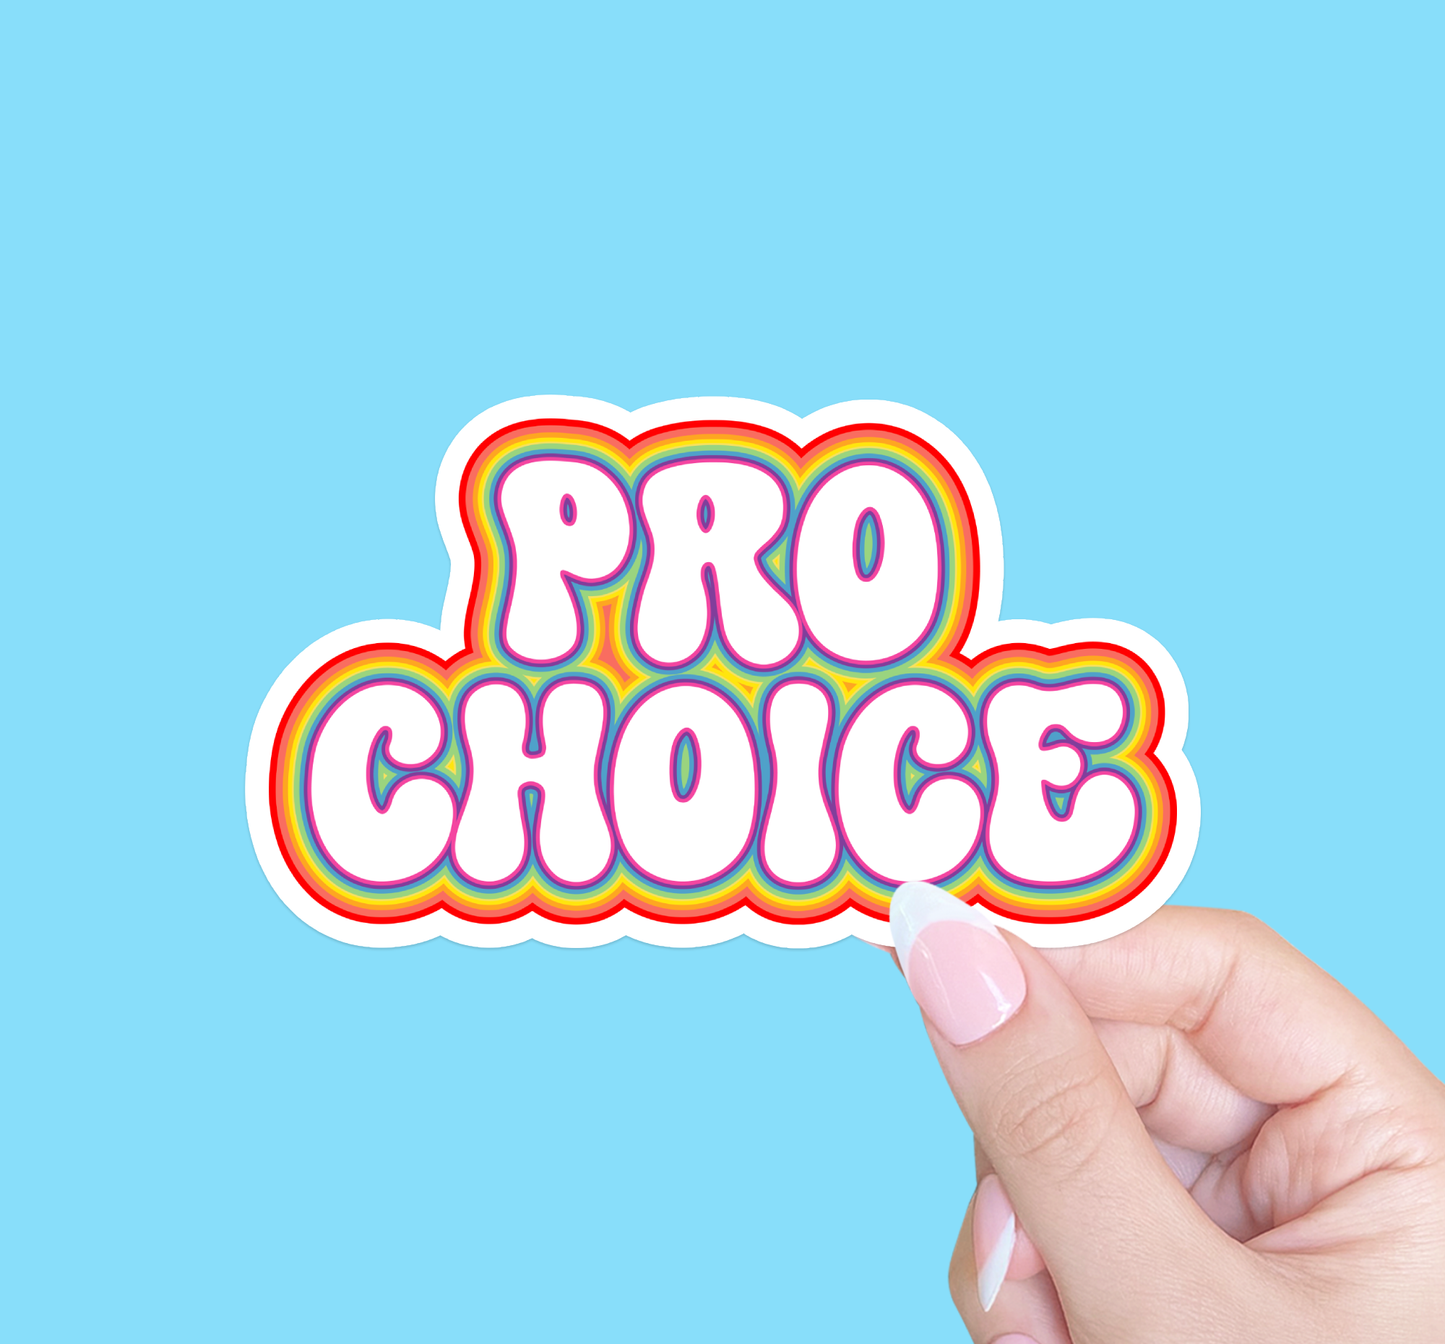 Sticker-ProChoice-01: Pro Choice